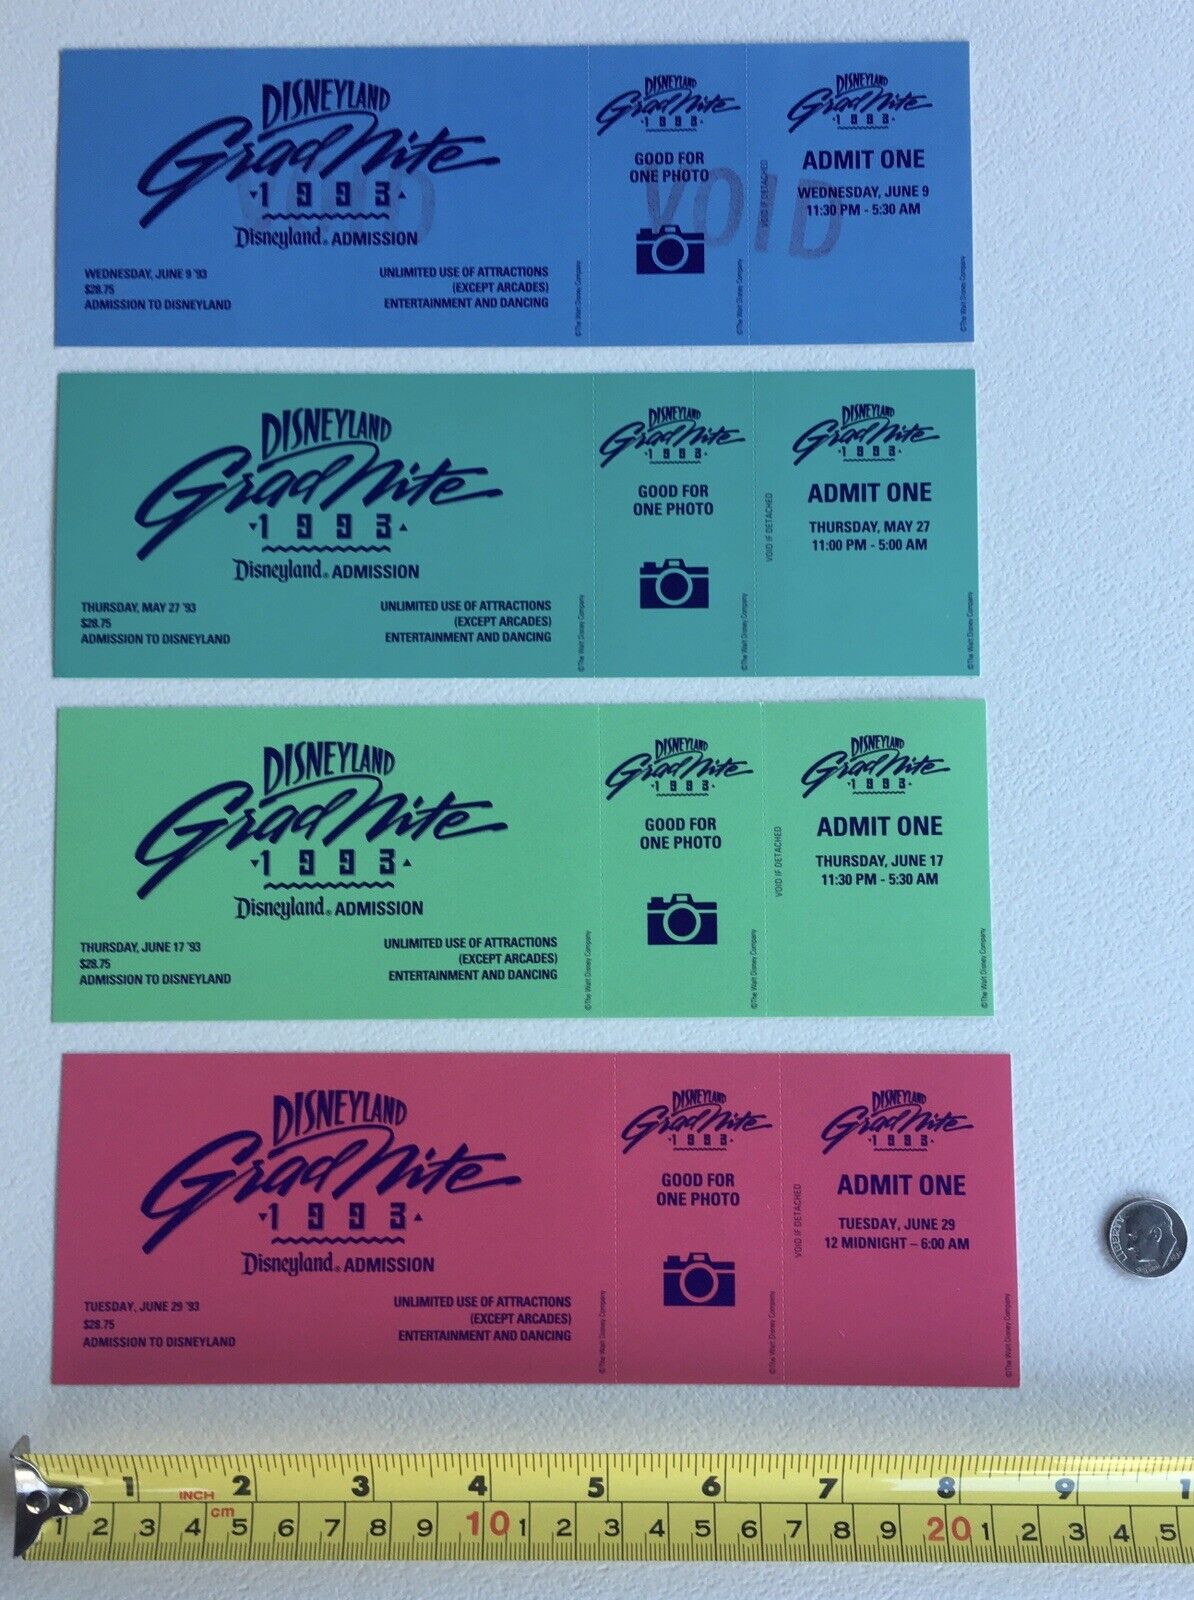 Vintage 1993 Disneyland Grad Nite Tickets with Admission and Photo Stubs